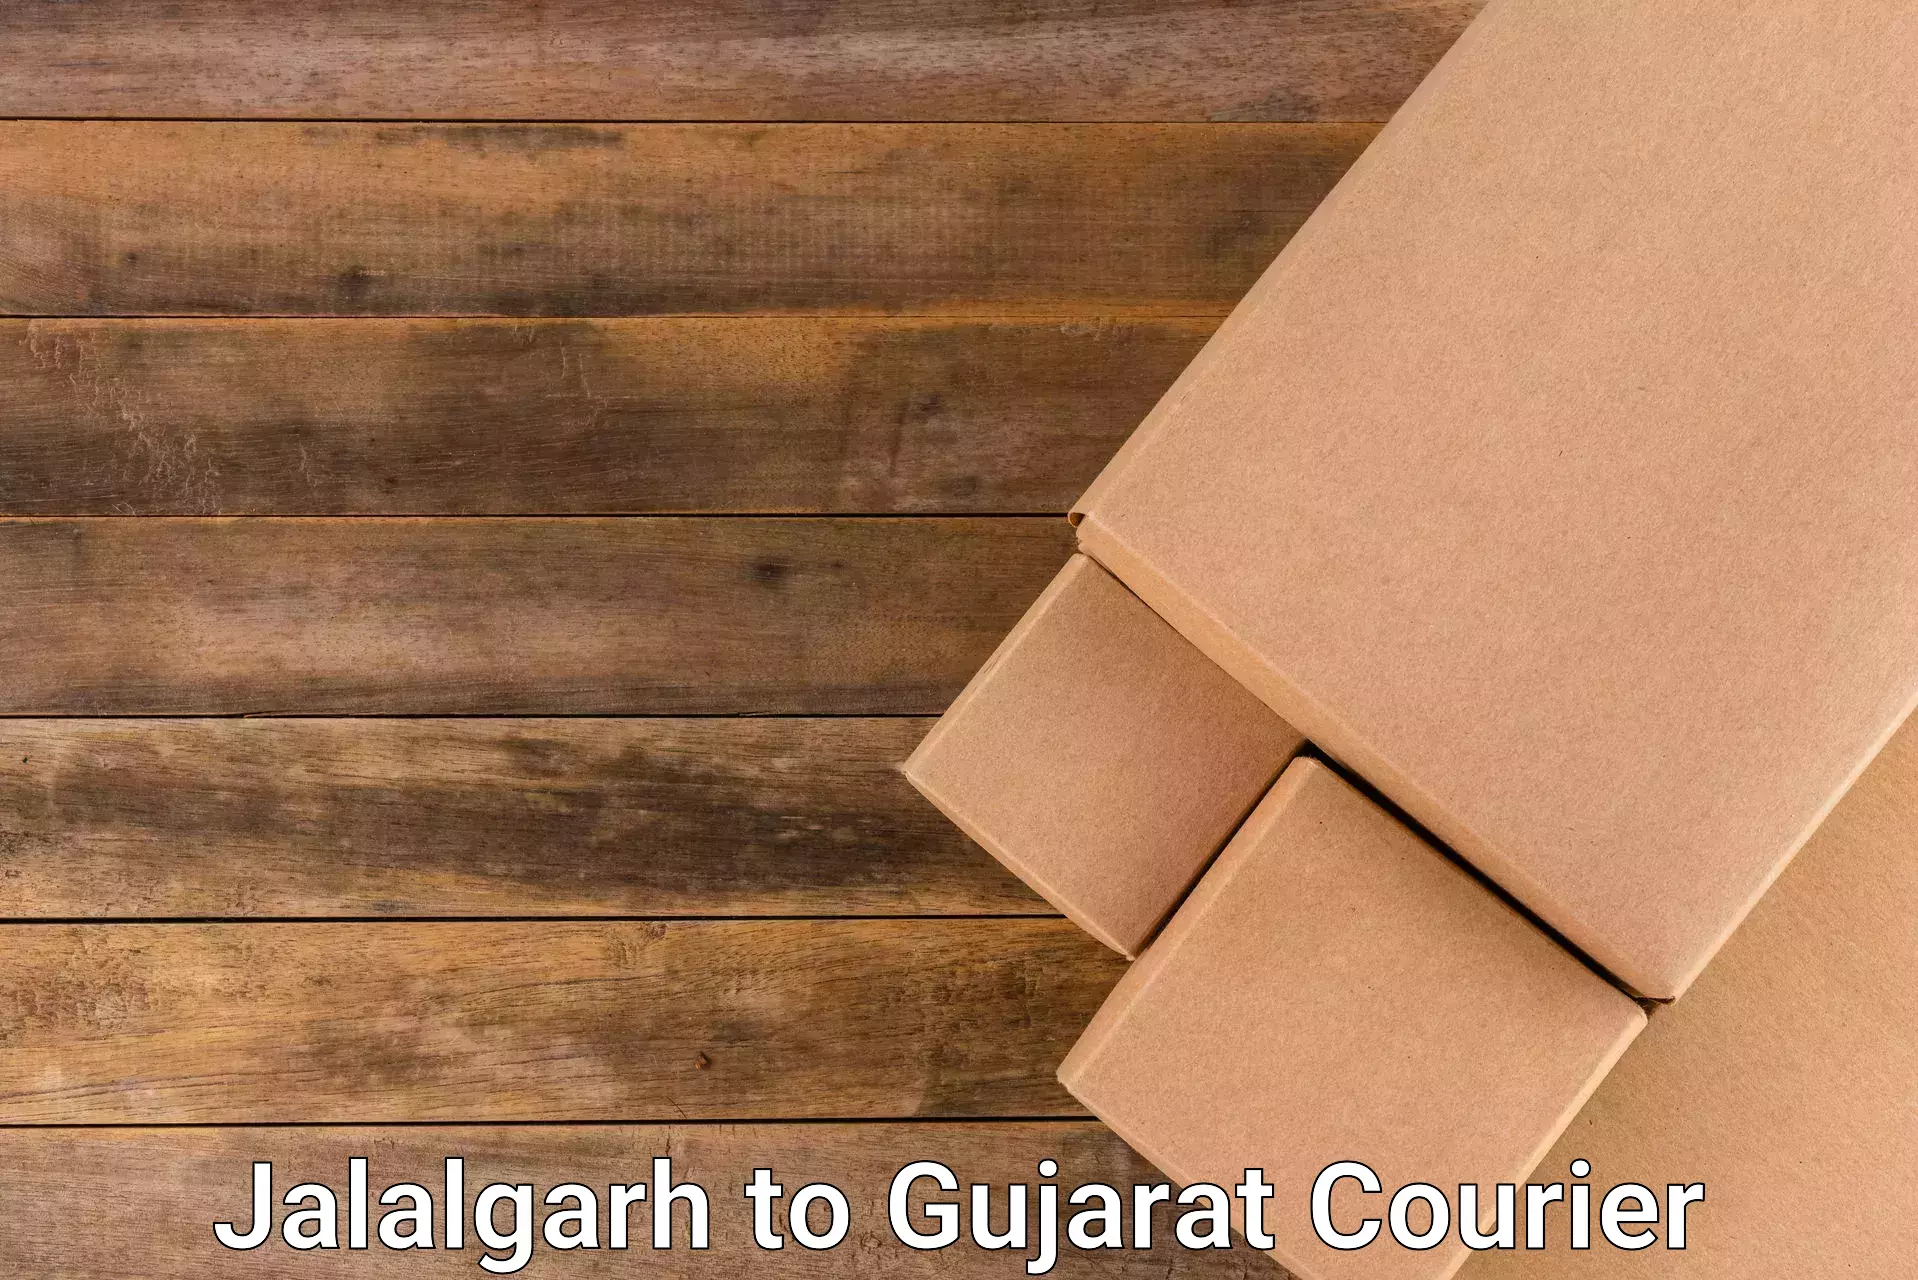 Reliable delivery network Jalalgarh to Kalol Gujarat